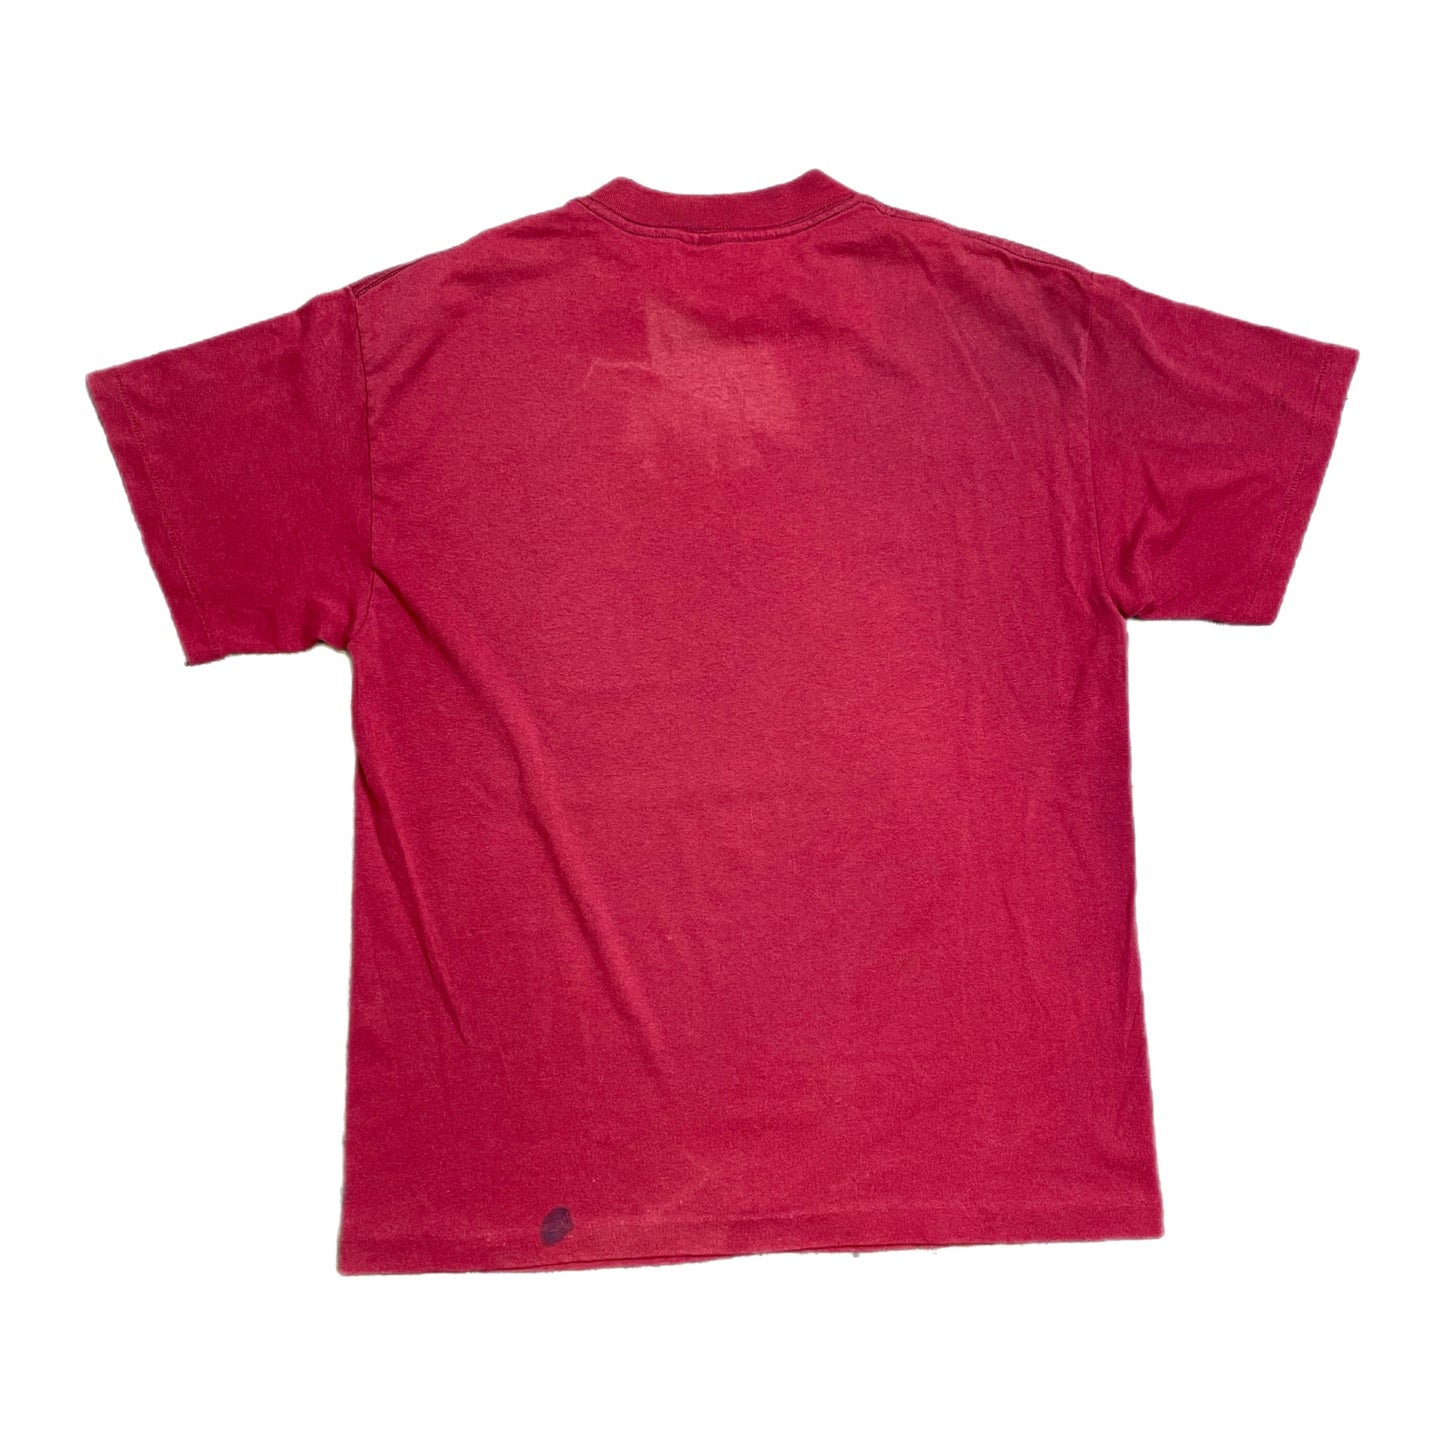 Vintage Washington Redskins (NFL) Shirt - L/XL